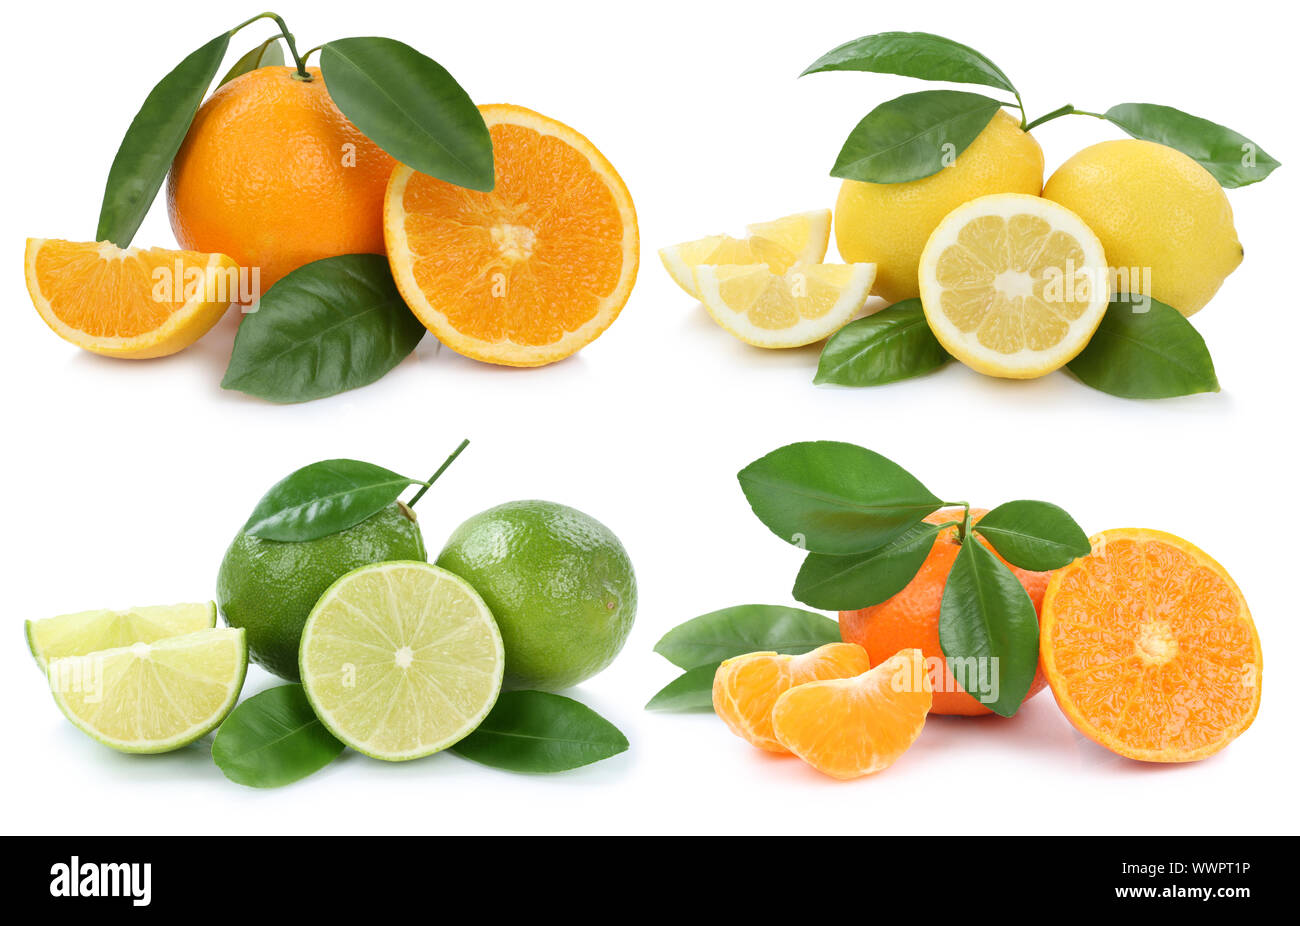 Collection Oranges Lemons Mandarins Fruits Free Release Stock Photo